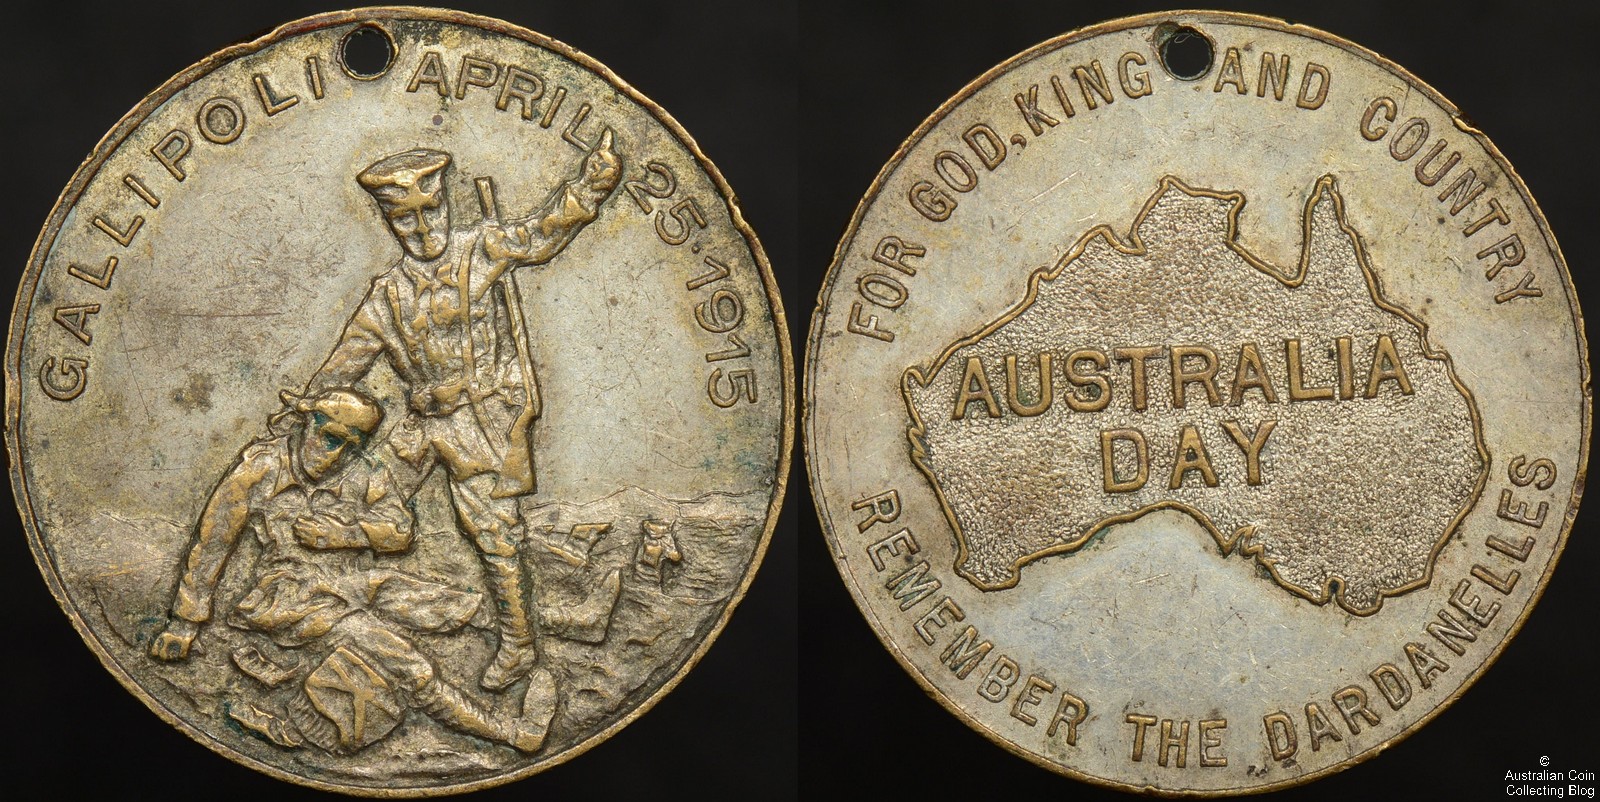 1915 Australia Day / Remember the Dardanelles Medallopm